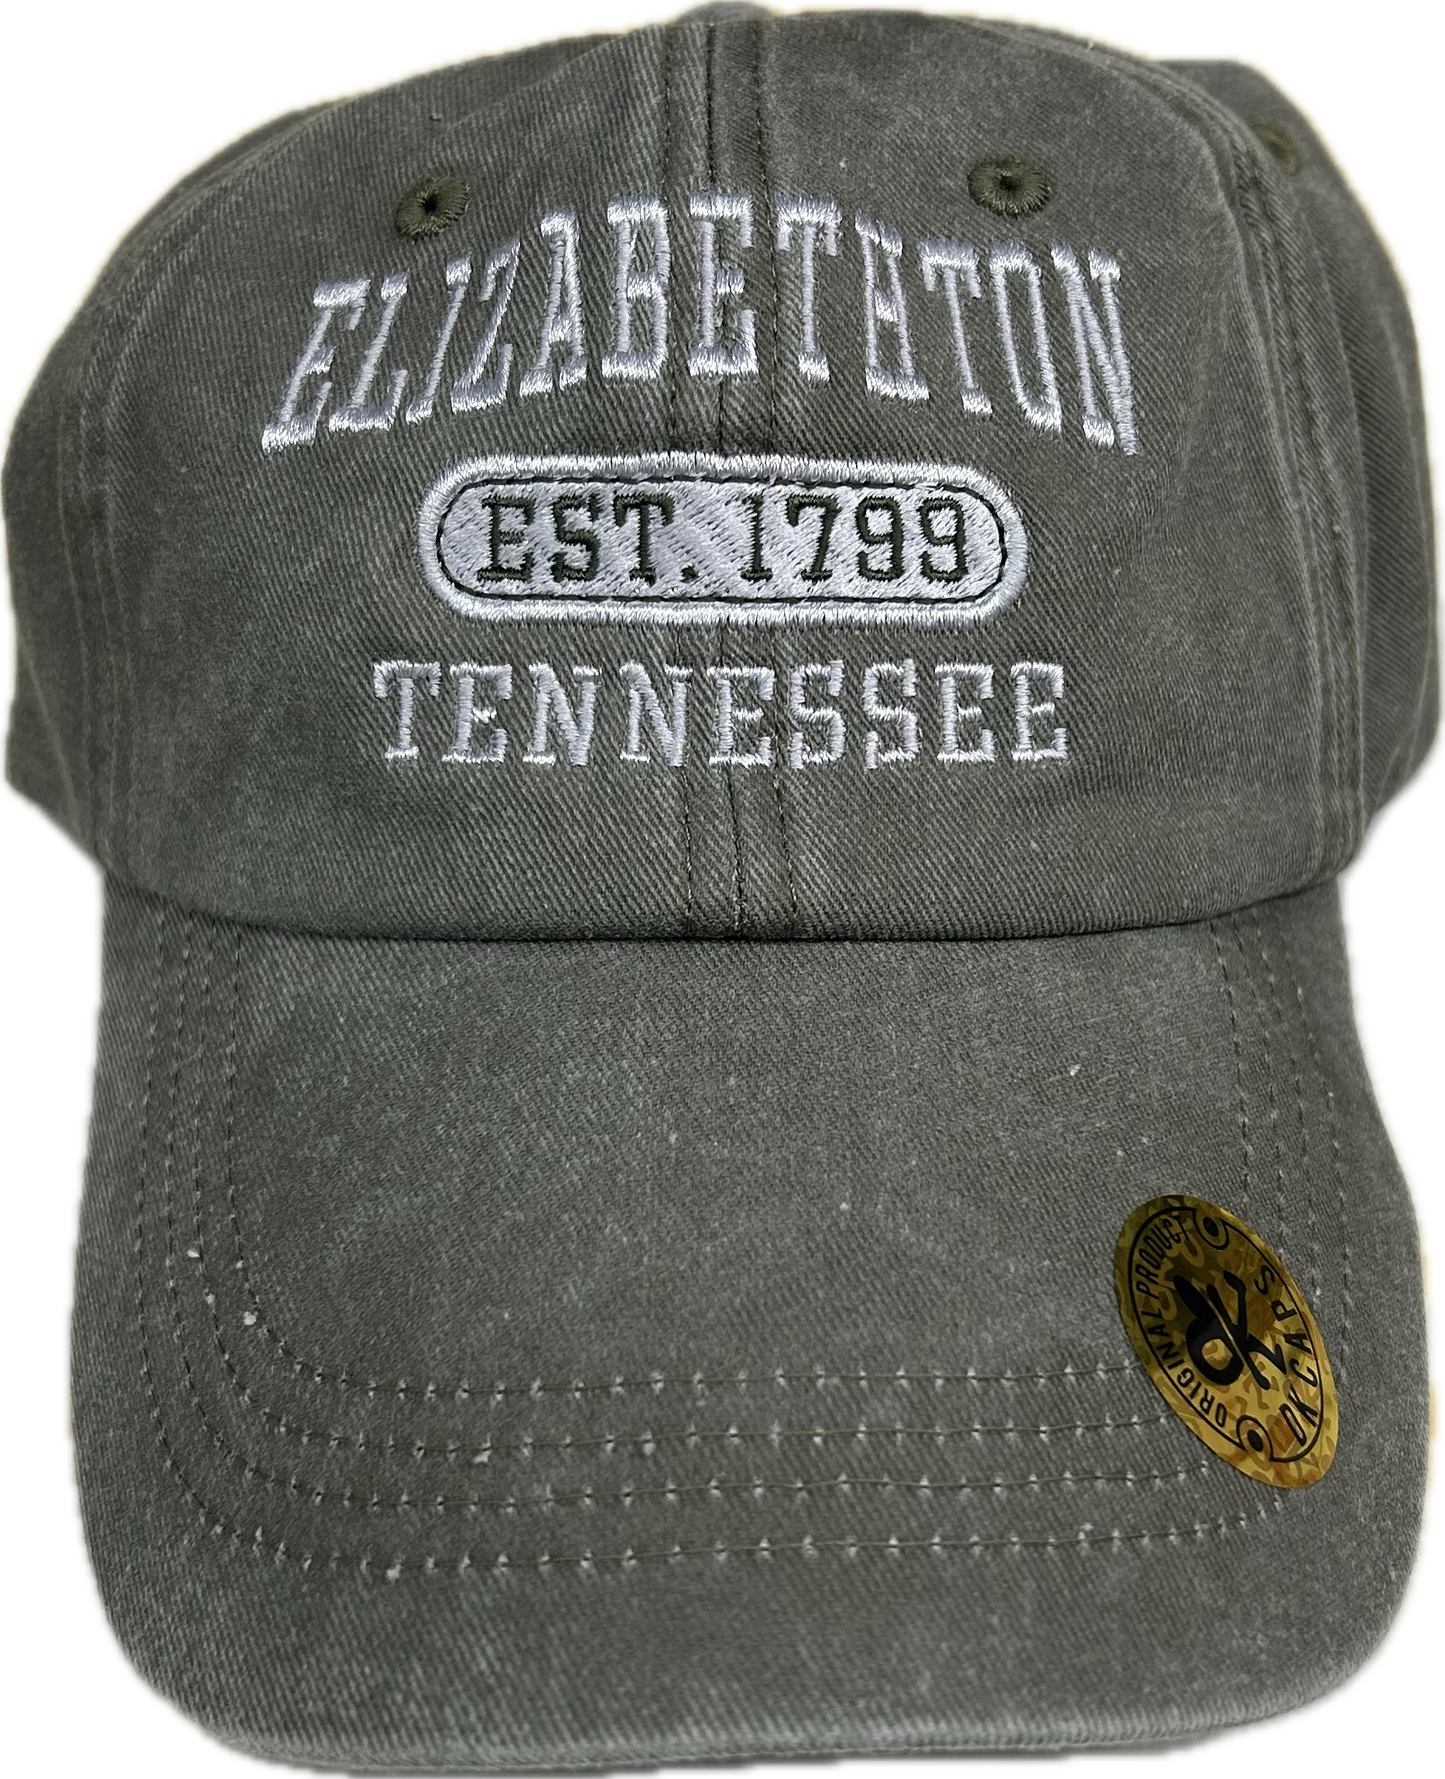 Elizabethton Tennessee Short Sleeve T-Shirt & Hat Combo Set